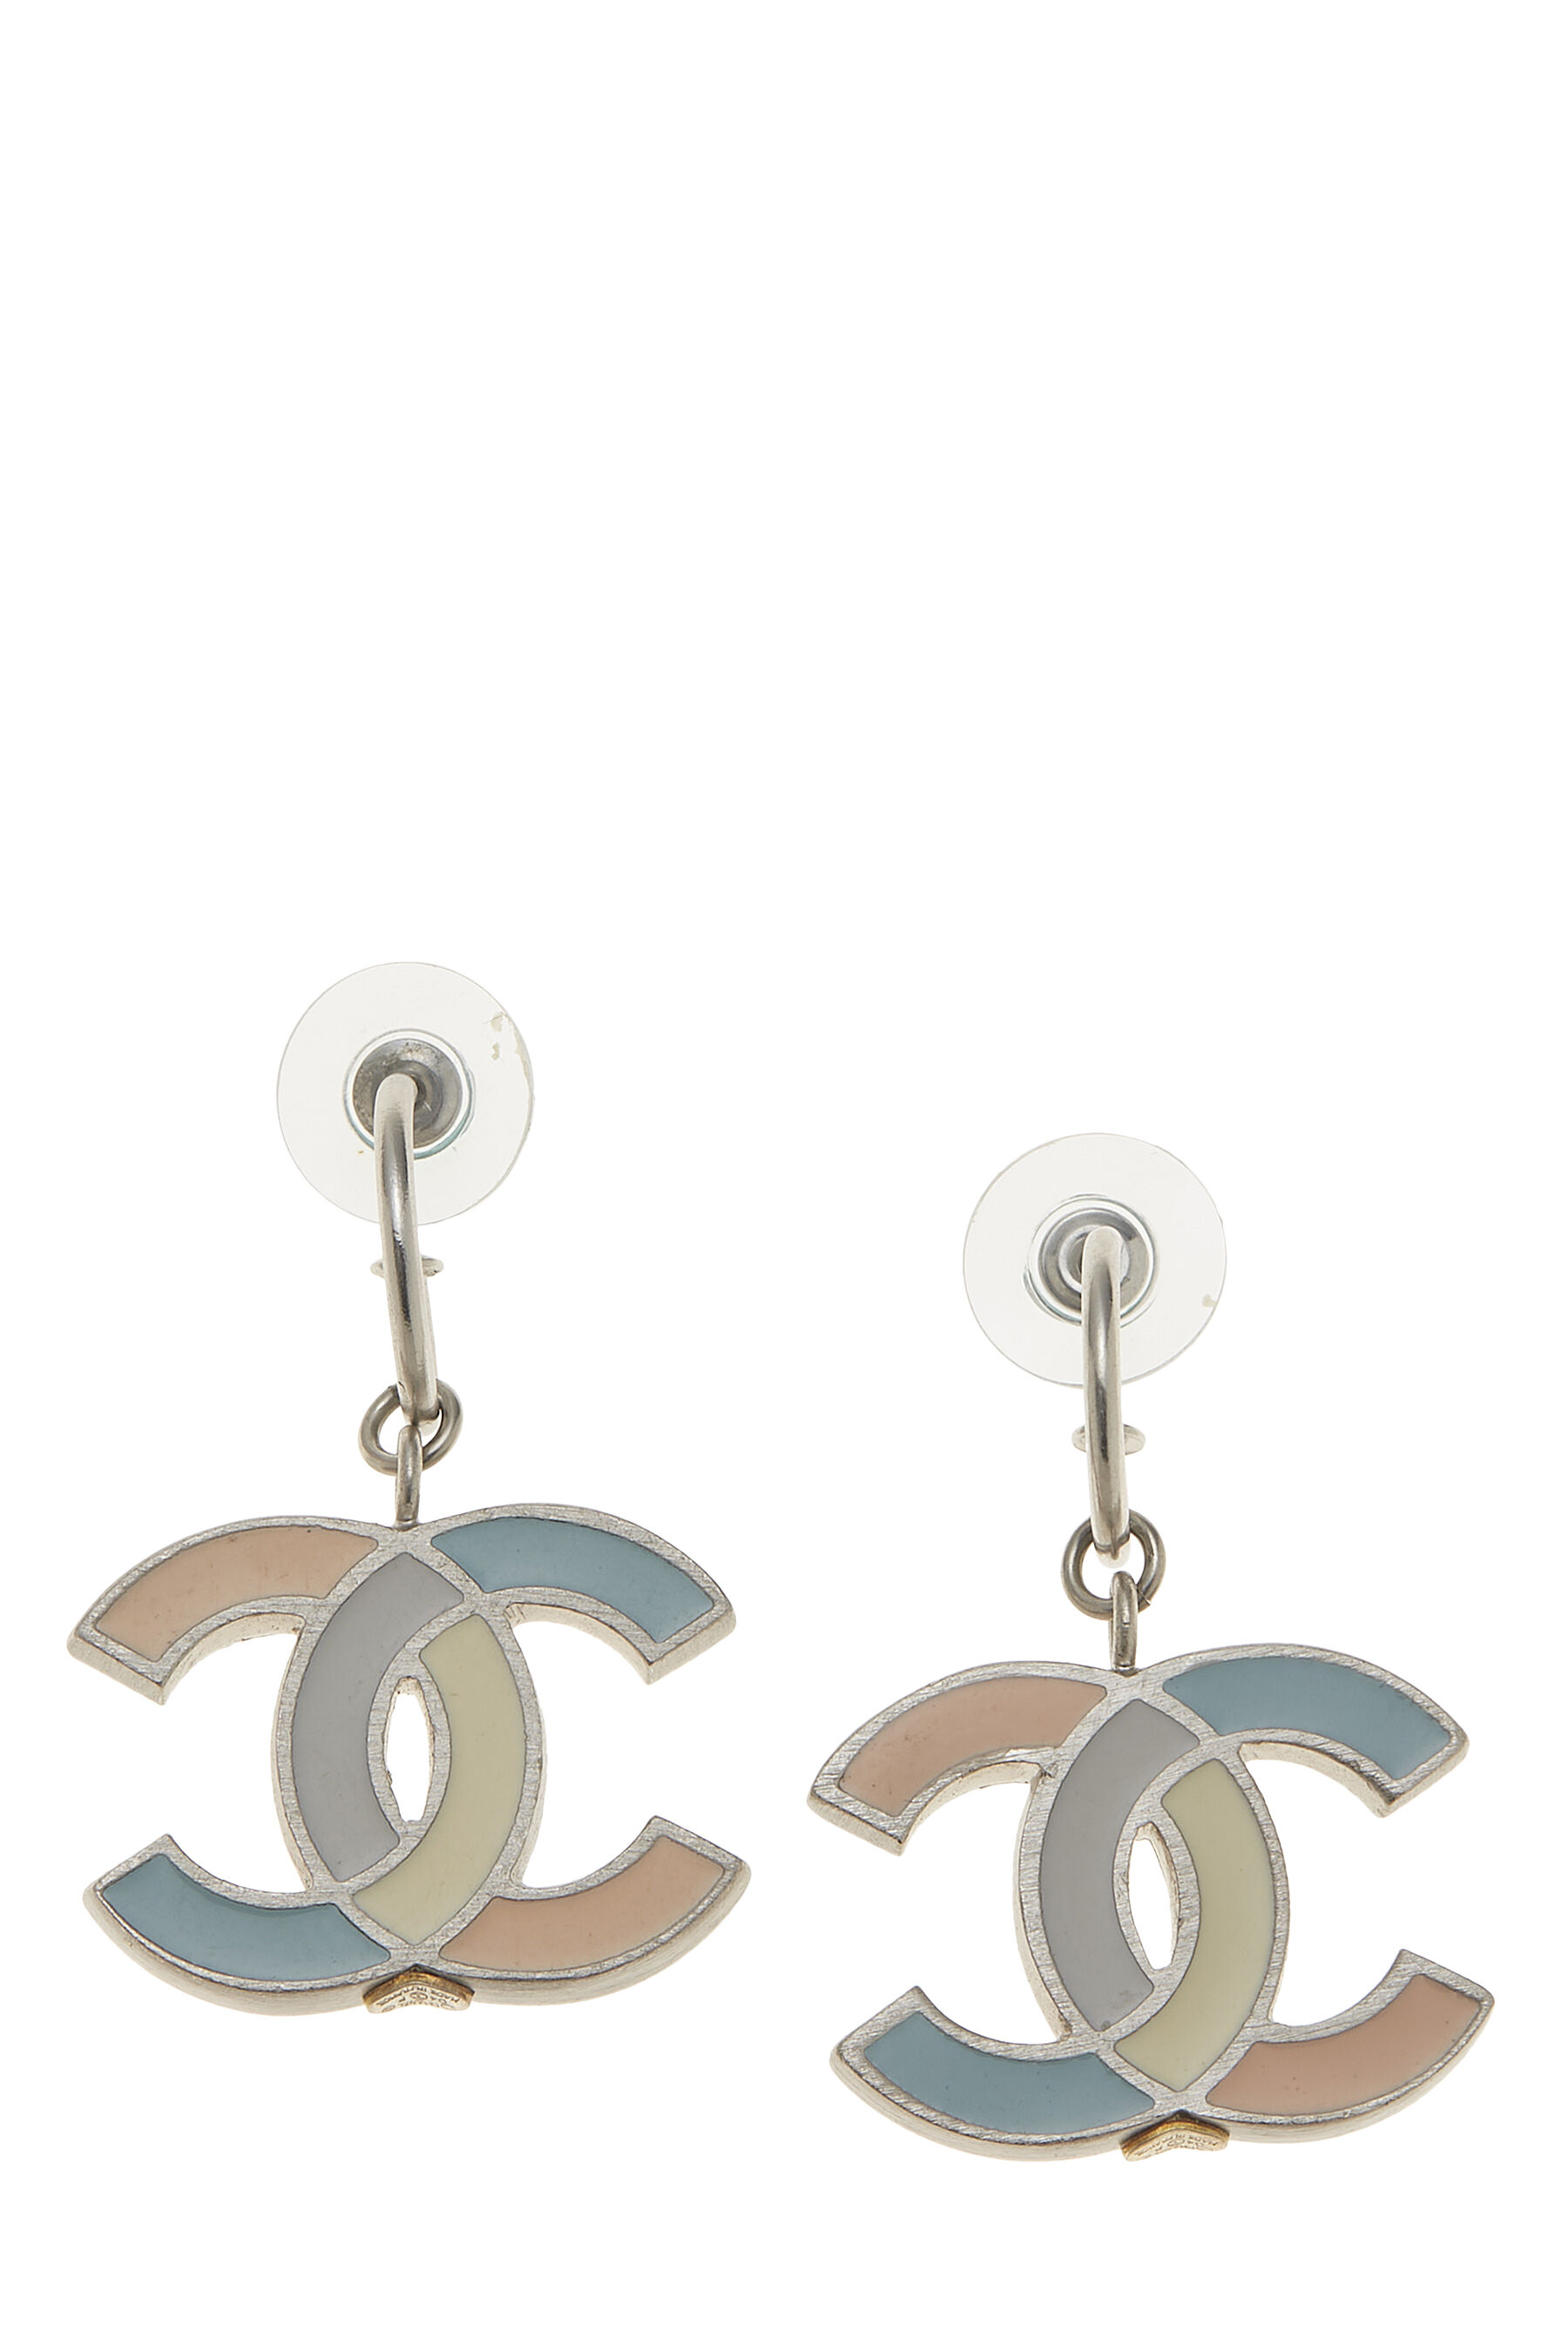 Chanel CC large gold dangling earrings